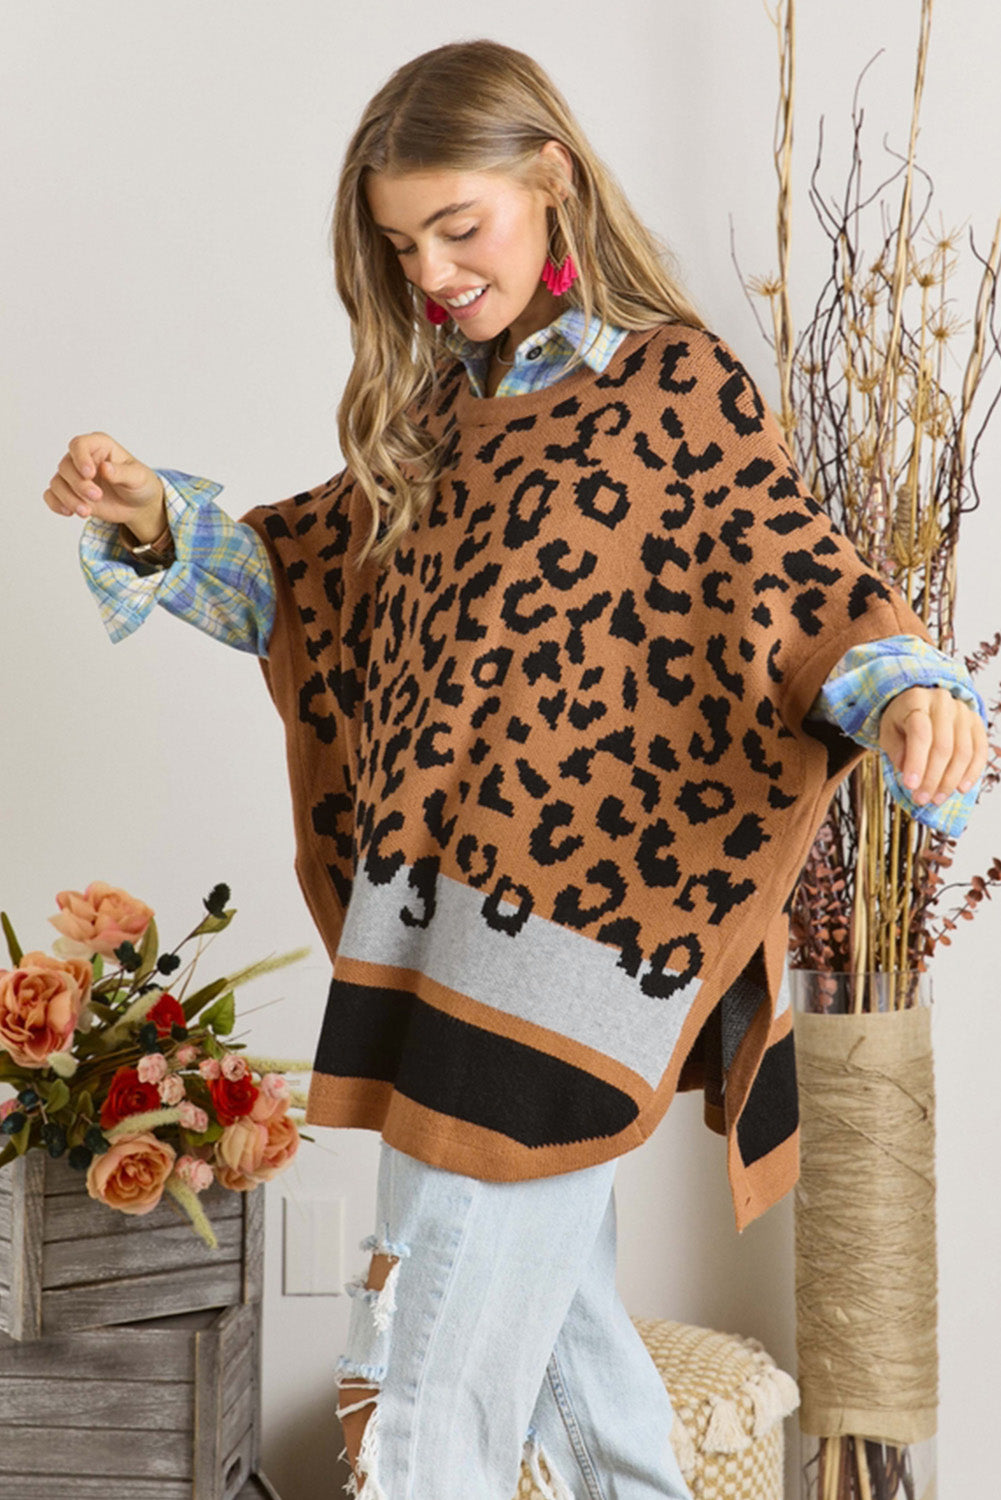 Pončo pulover s kameljim leopardjim vzorcem